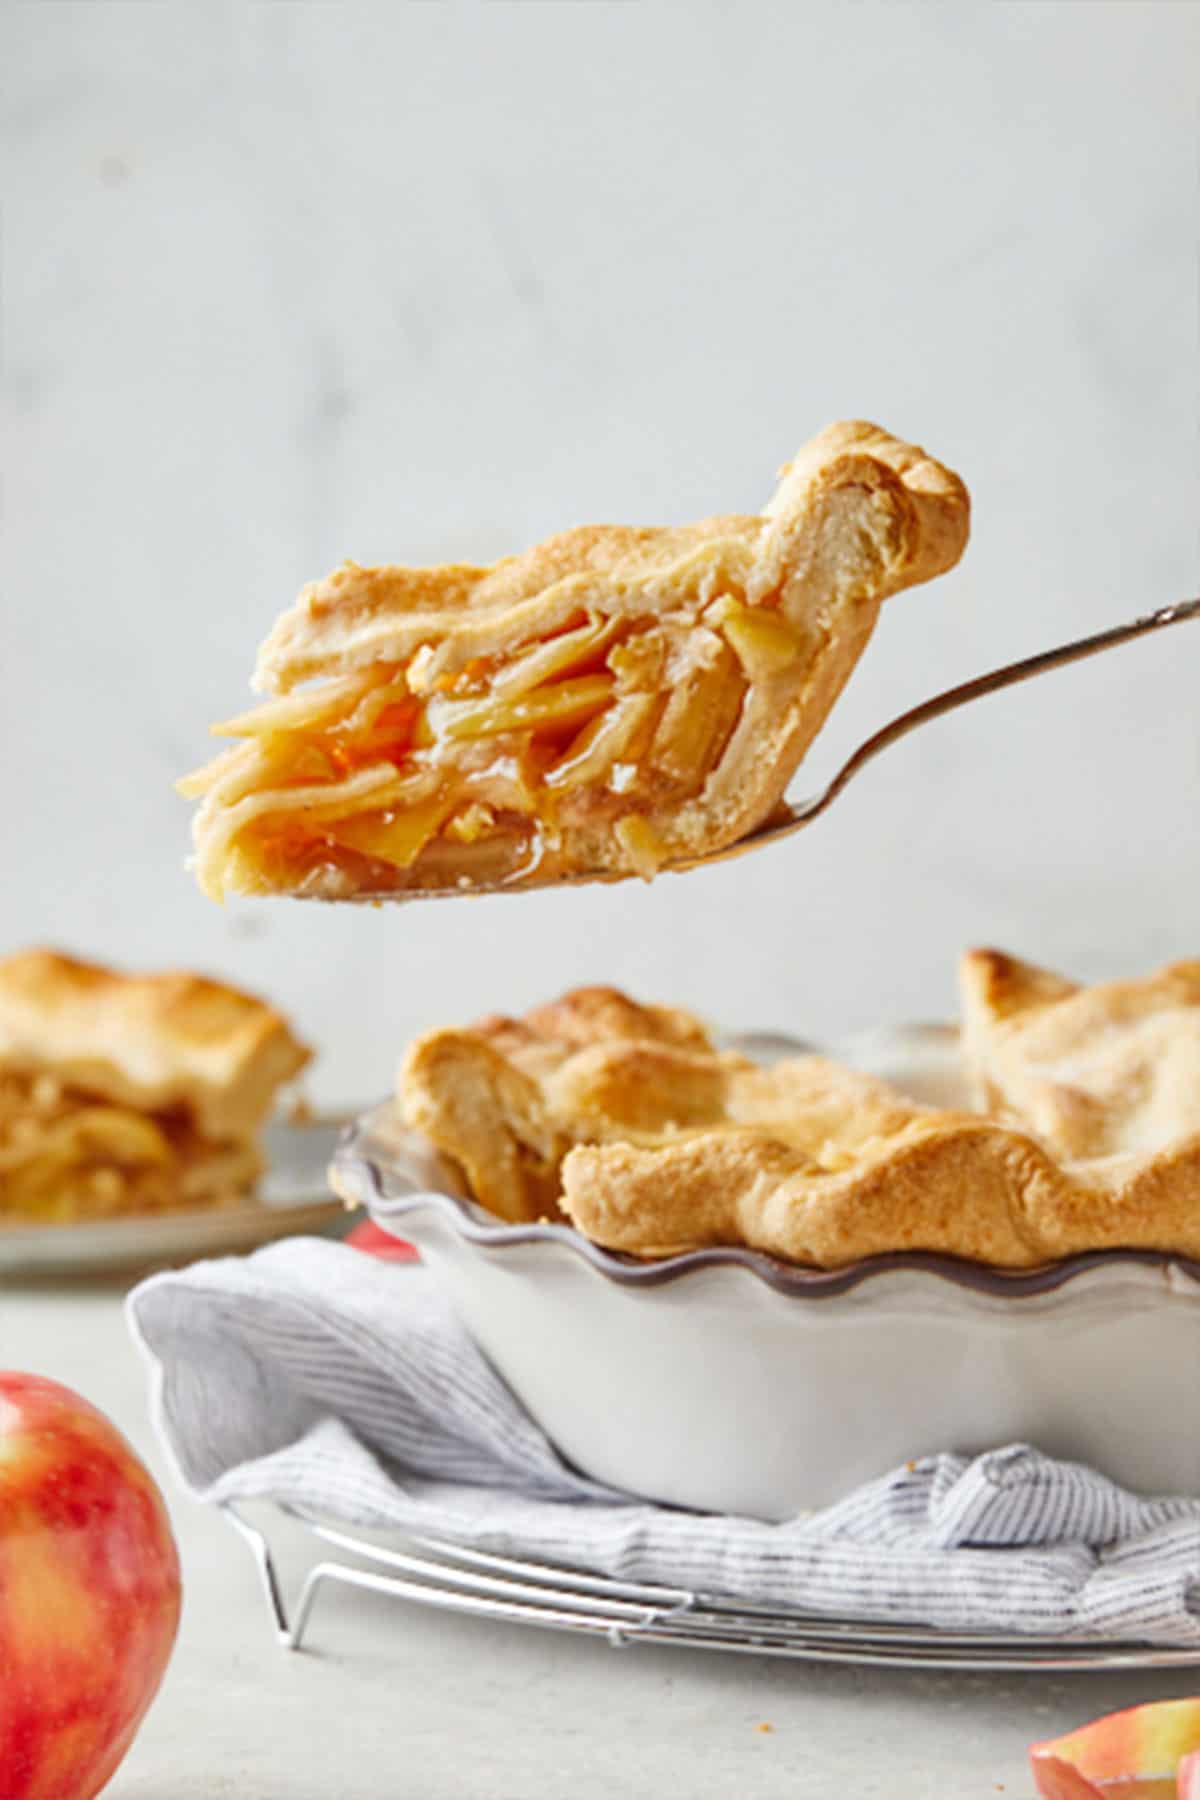 Best Apple Pie Recipe 1 - The Best Apple Pie Recipe Online (Fool-Proof!)